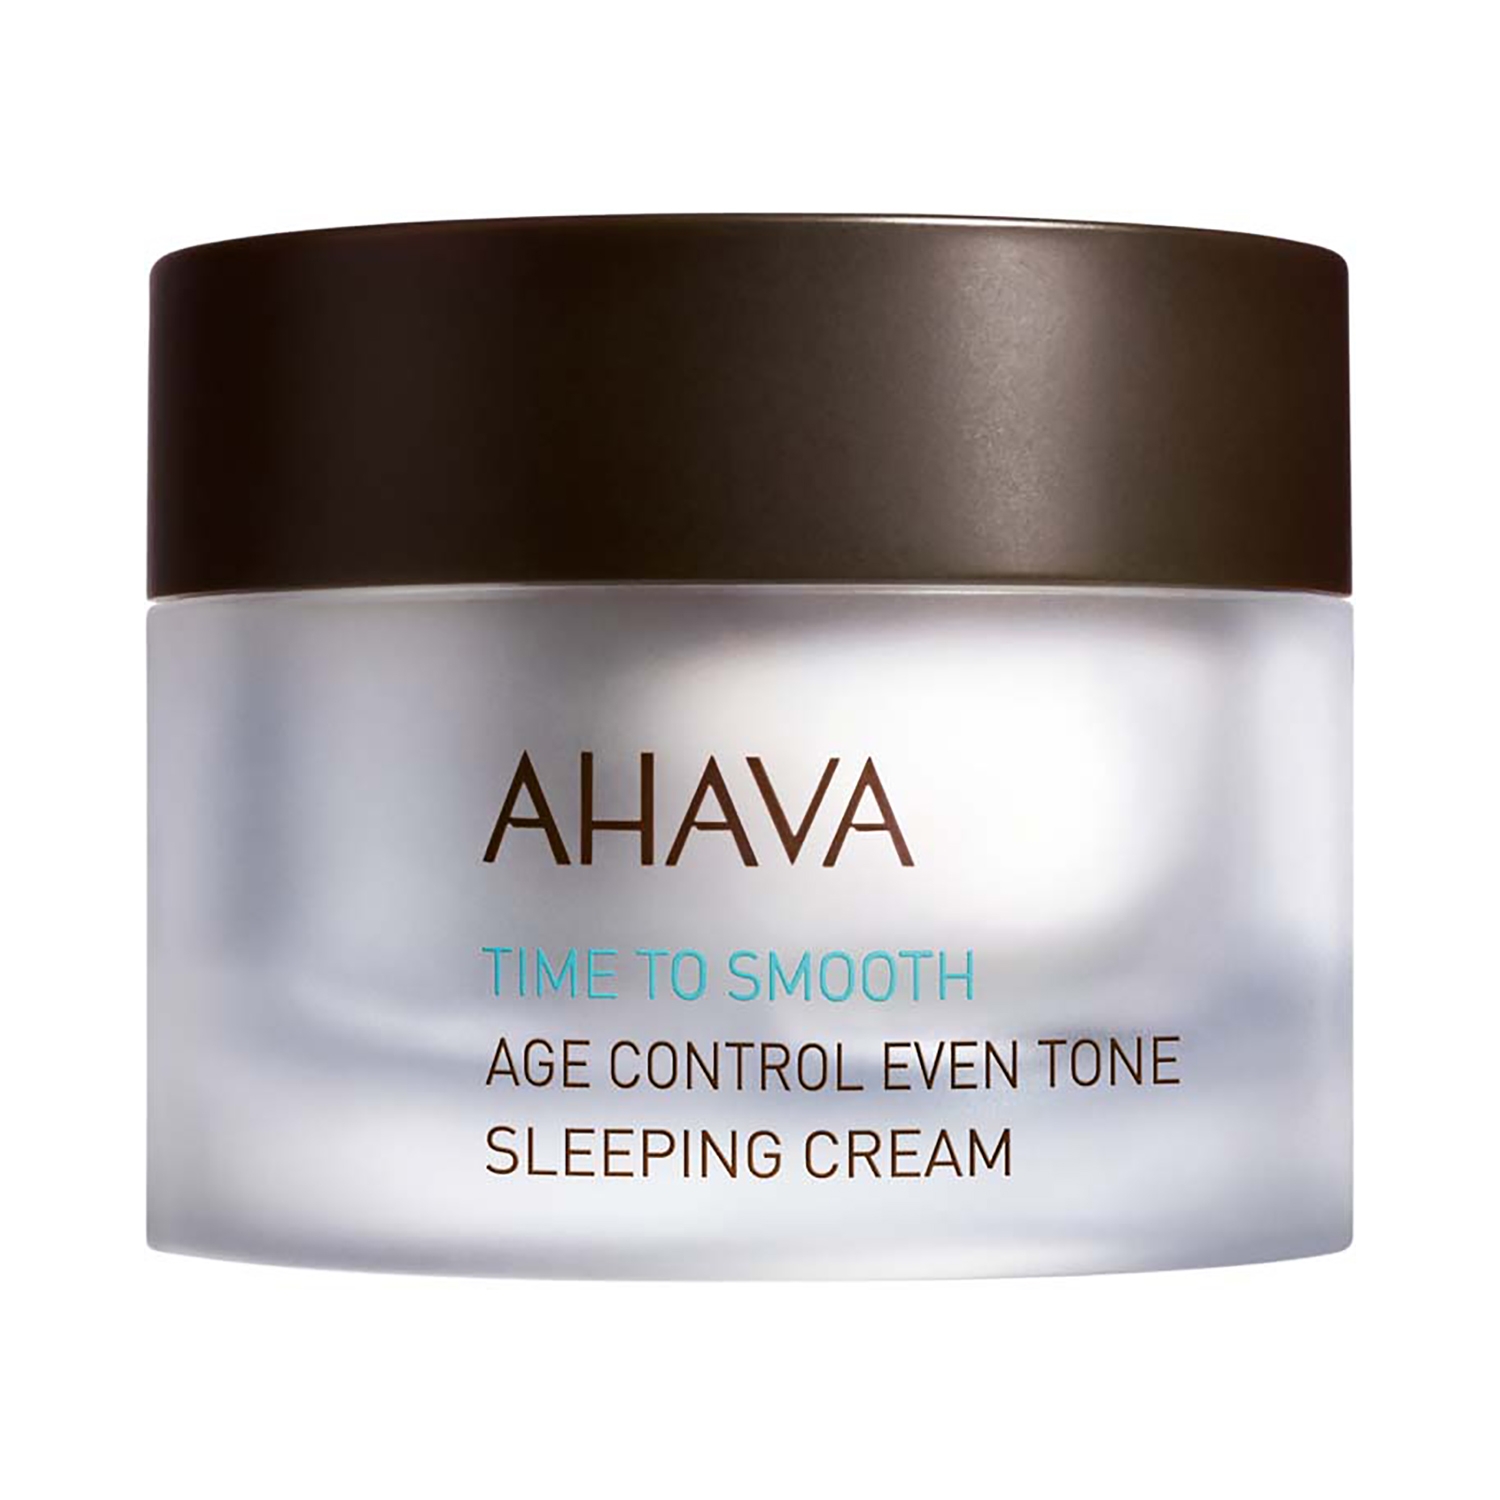 Ahava | Tira: Shop Makeup, Skin, Hair & Beauty Products Online